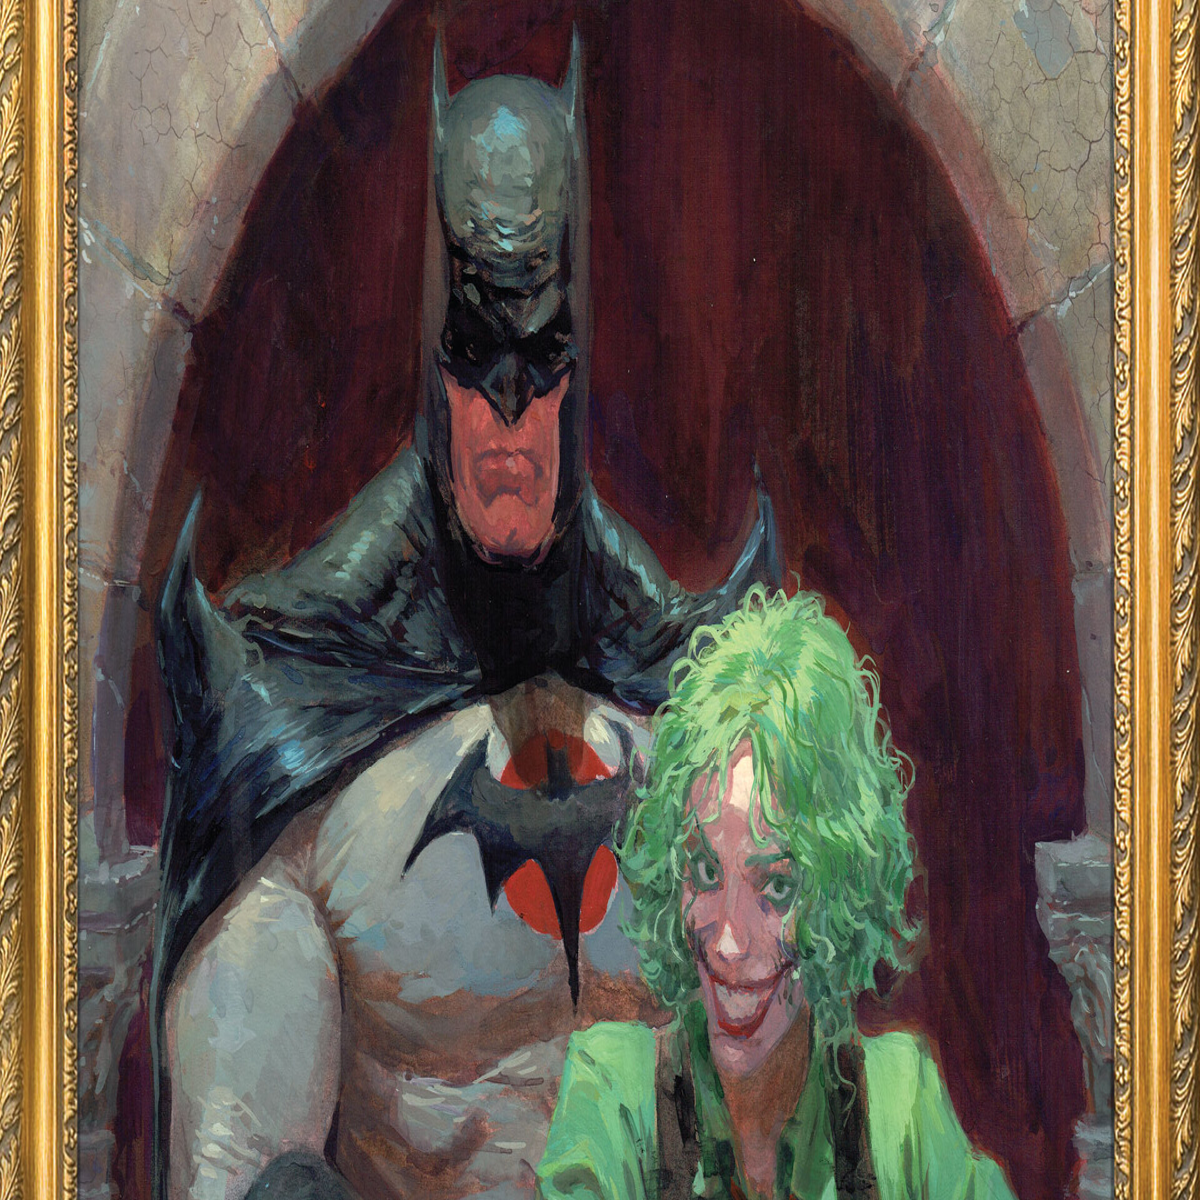 flashpoint paradox batman and joker